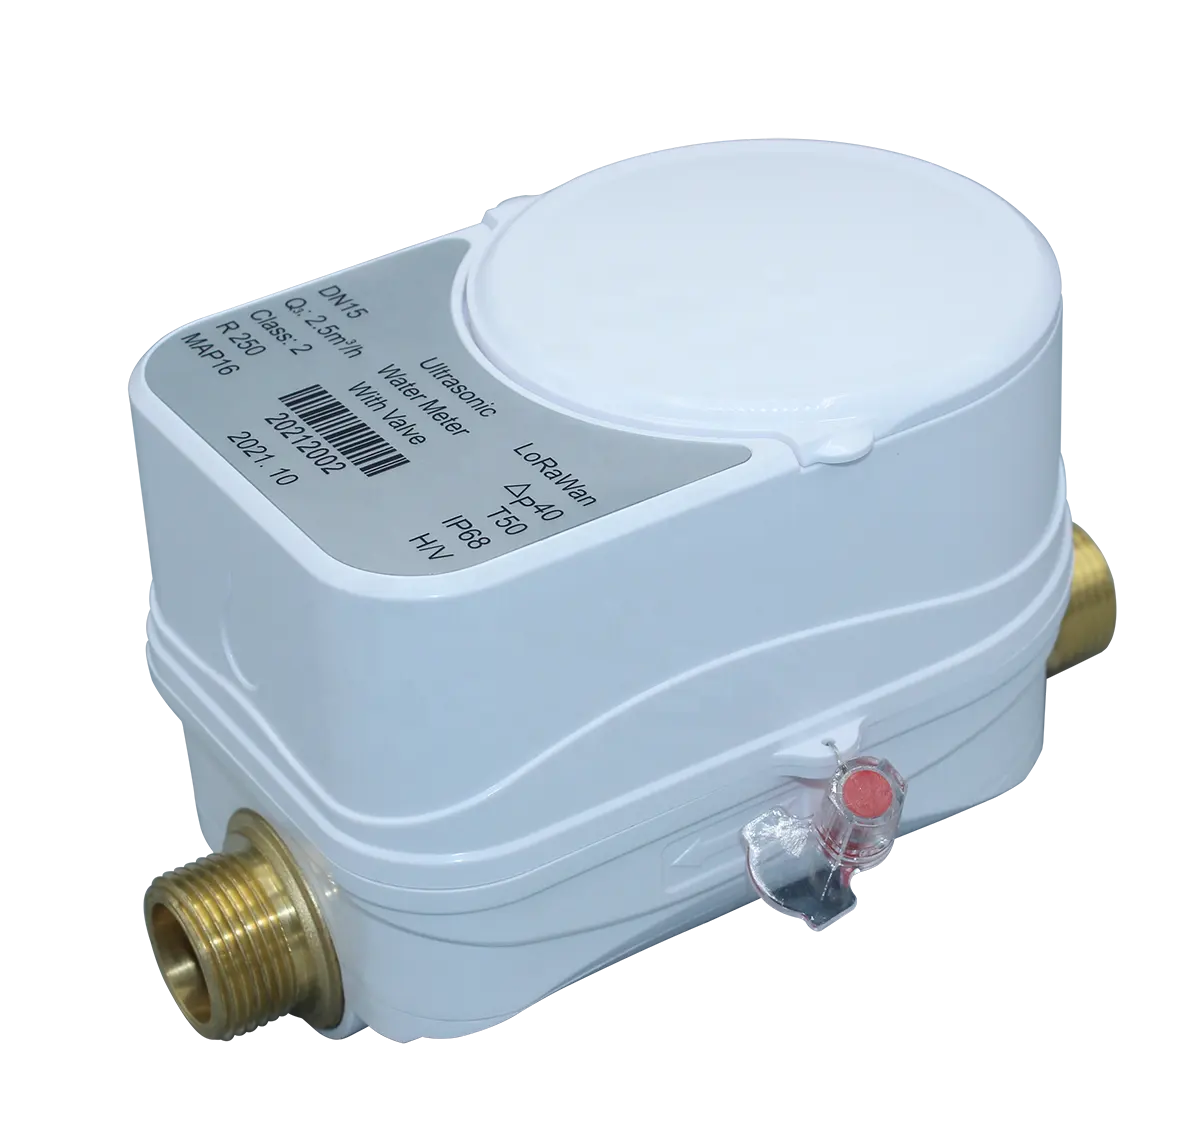 TuyaスマートAPP Zigbee/NB-IoT/LoRaWanワイヤレス通信に基づくバルブ制御付き超音波水道メーター